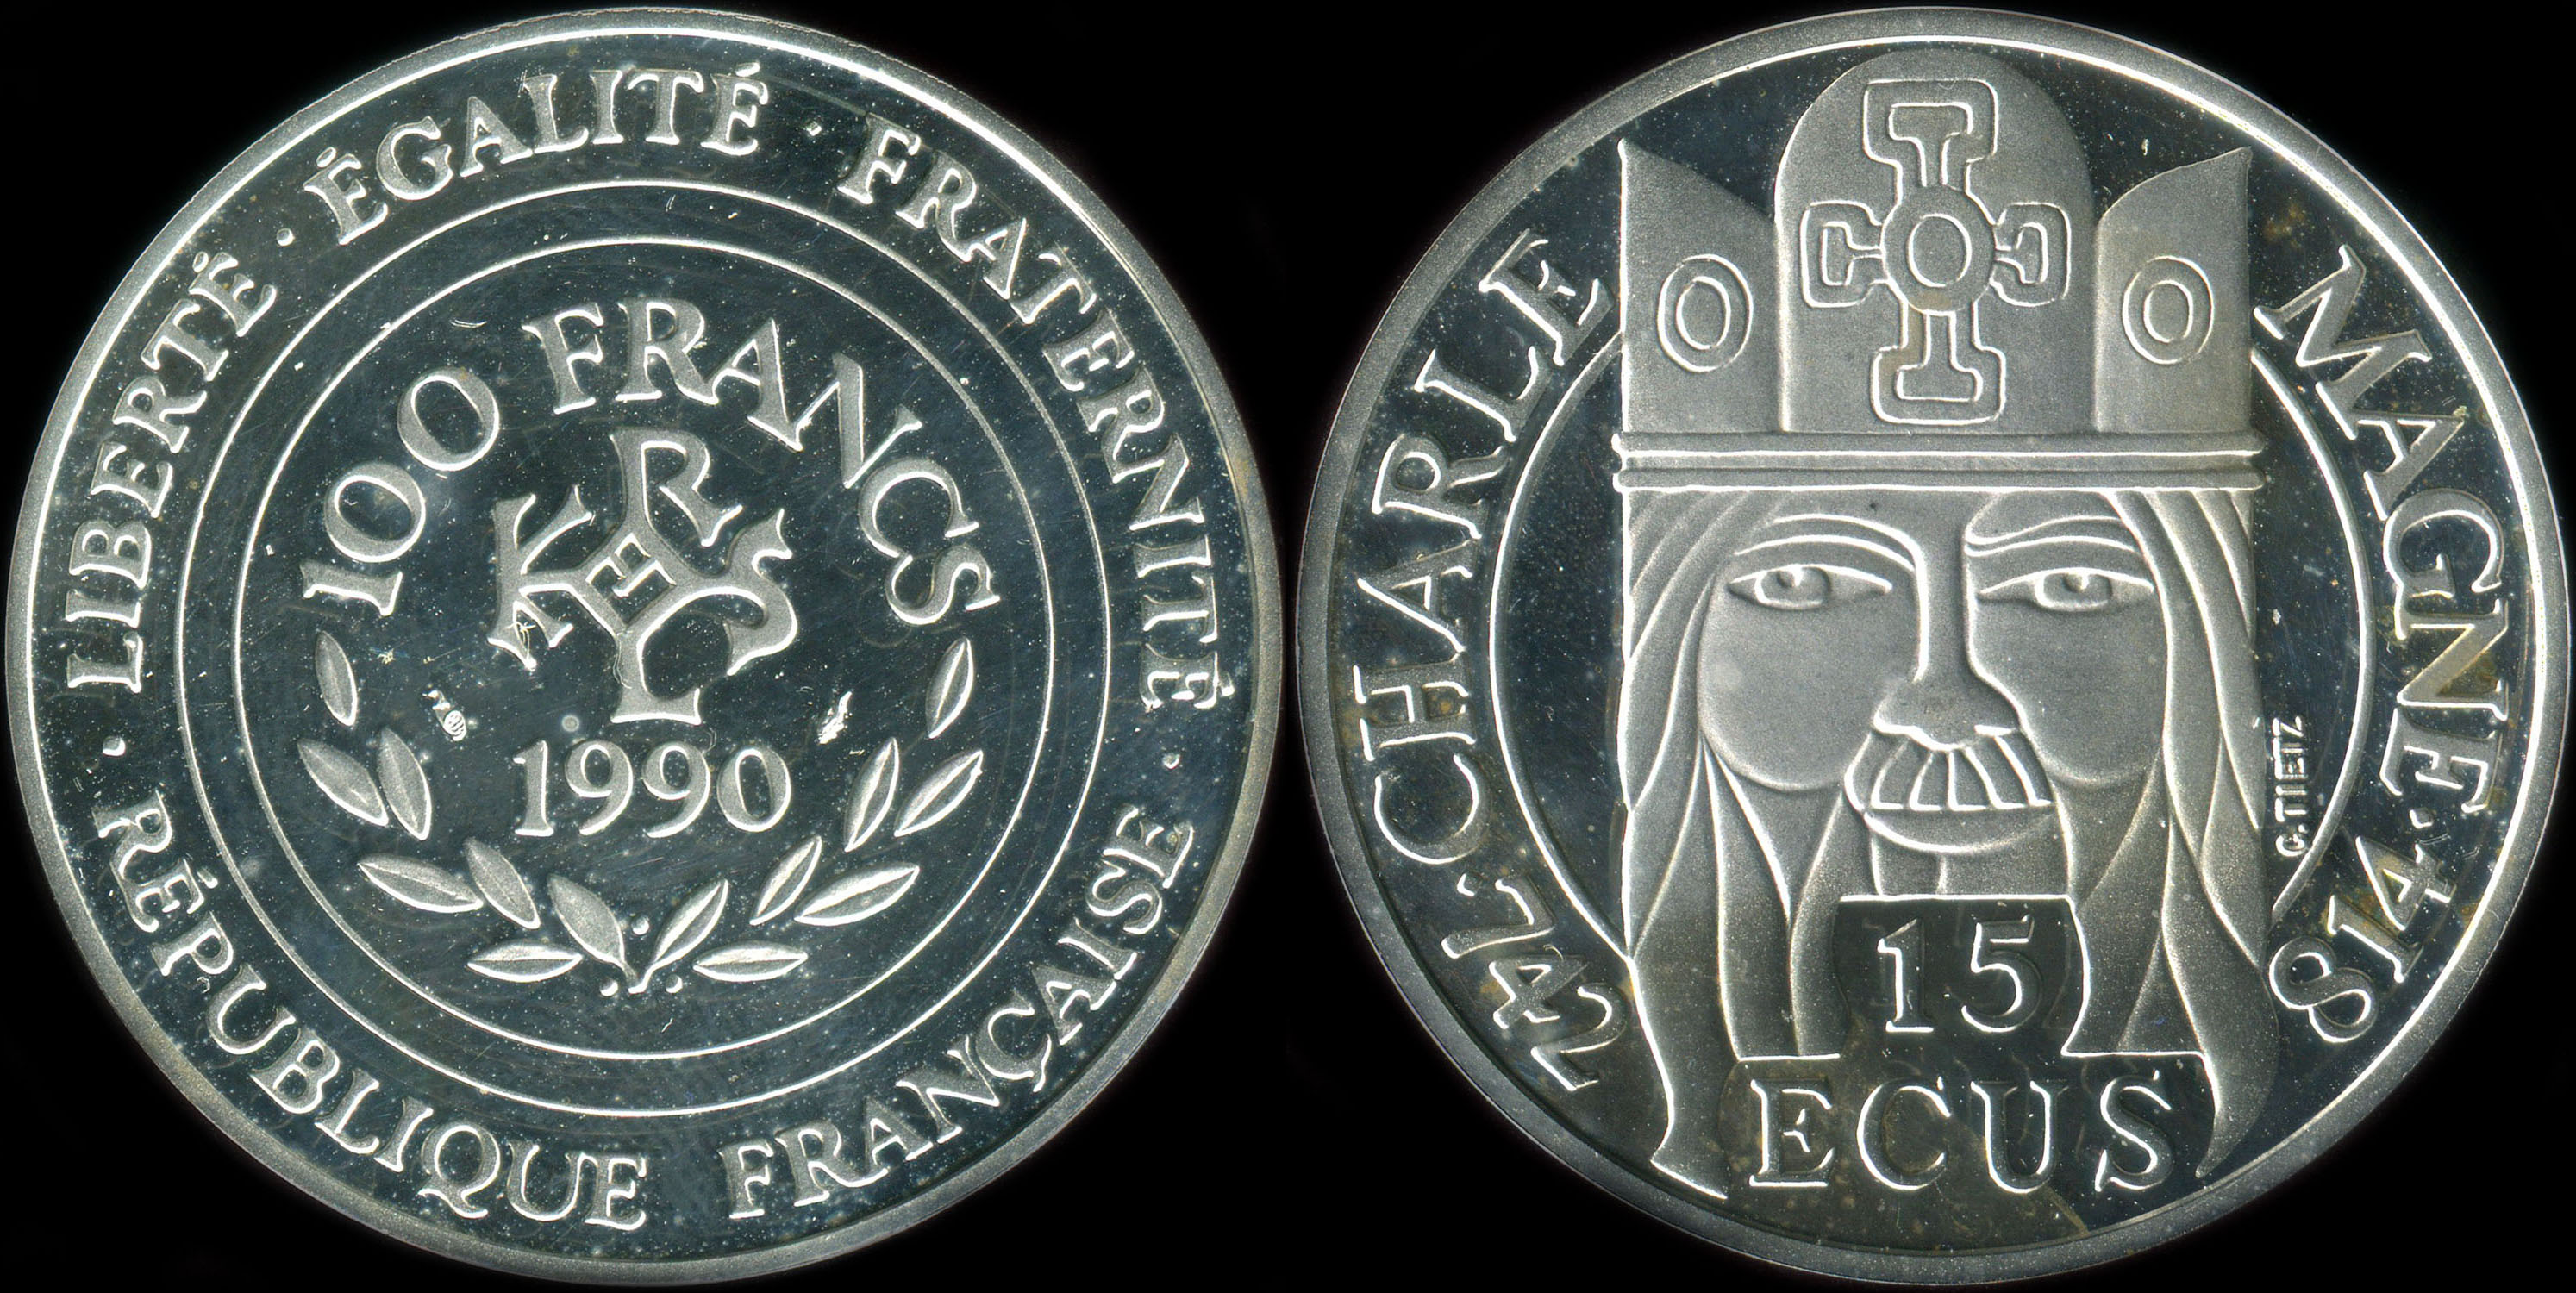 Pièce de 100 francs - 15 ecus 1990 - Charlemagne 742-814